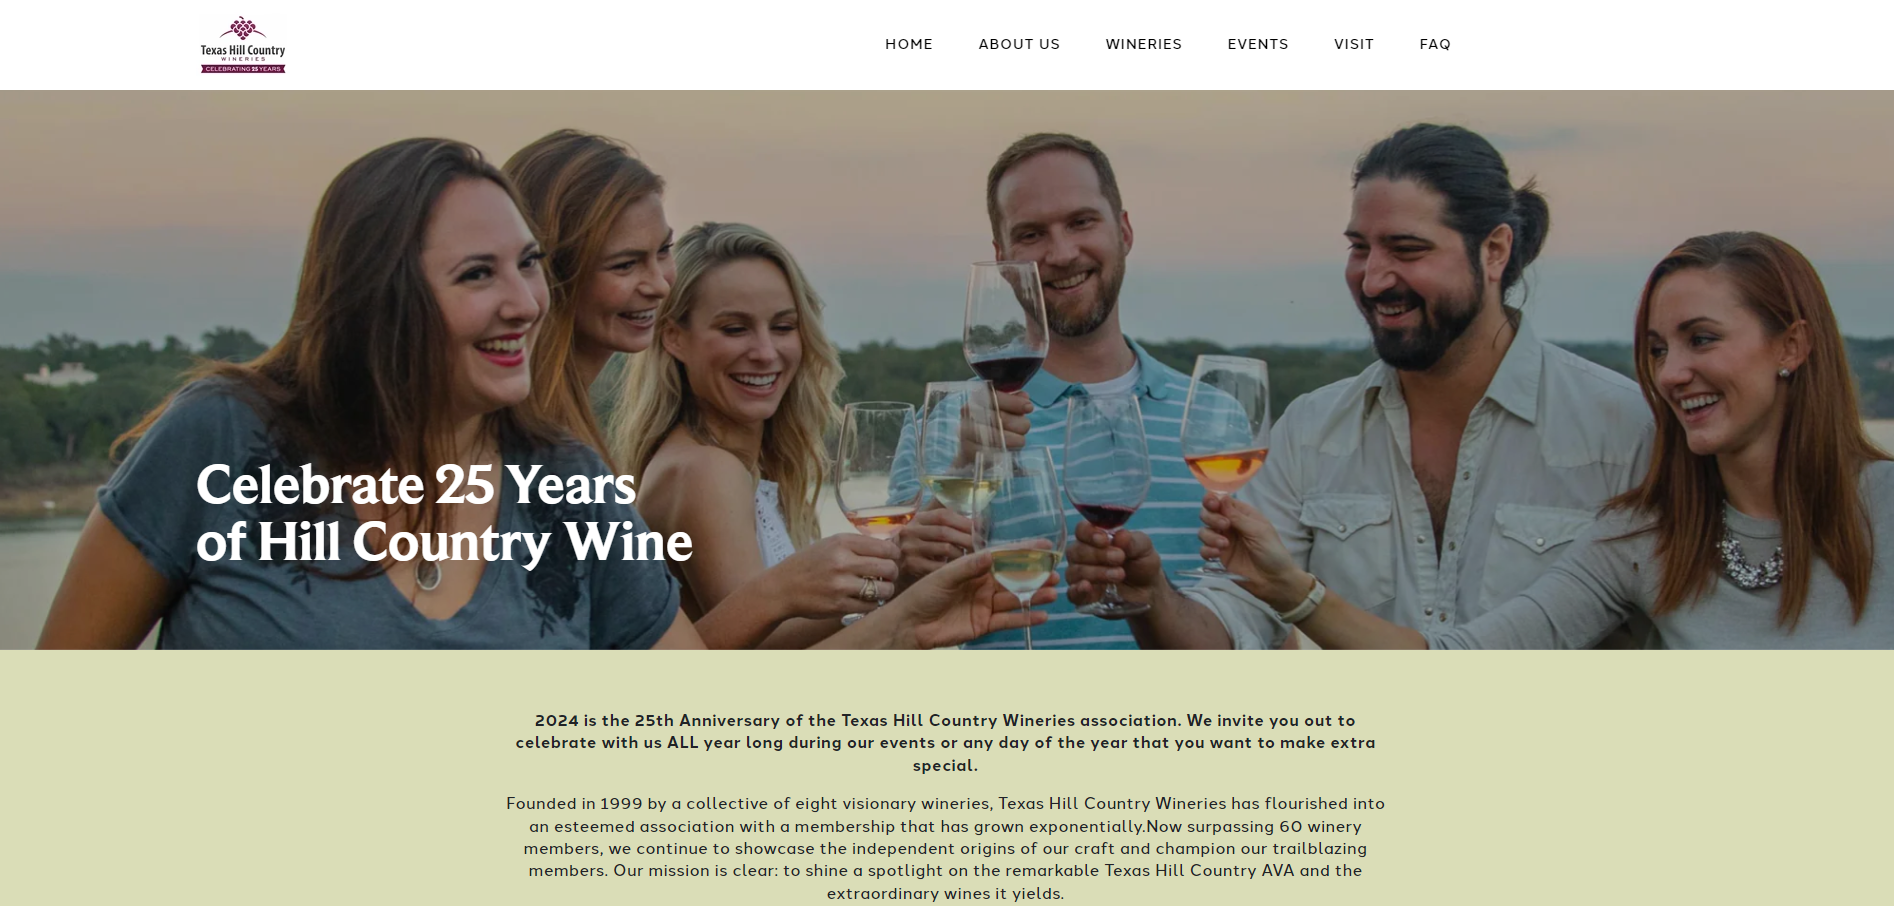 Texas hill country wineries website hero screenshot